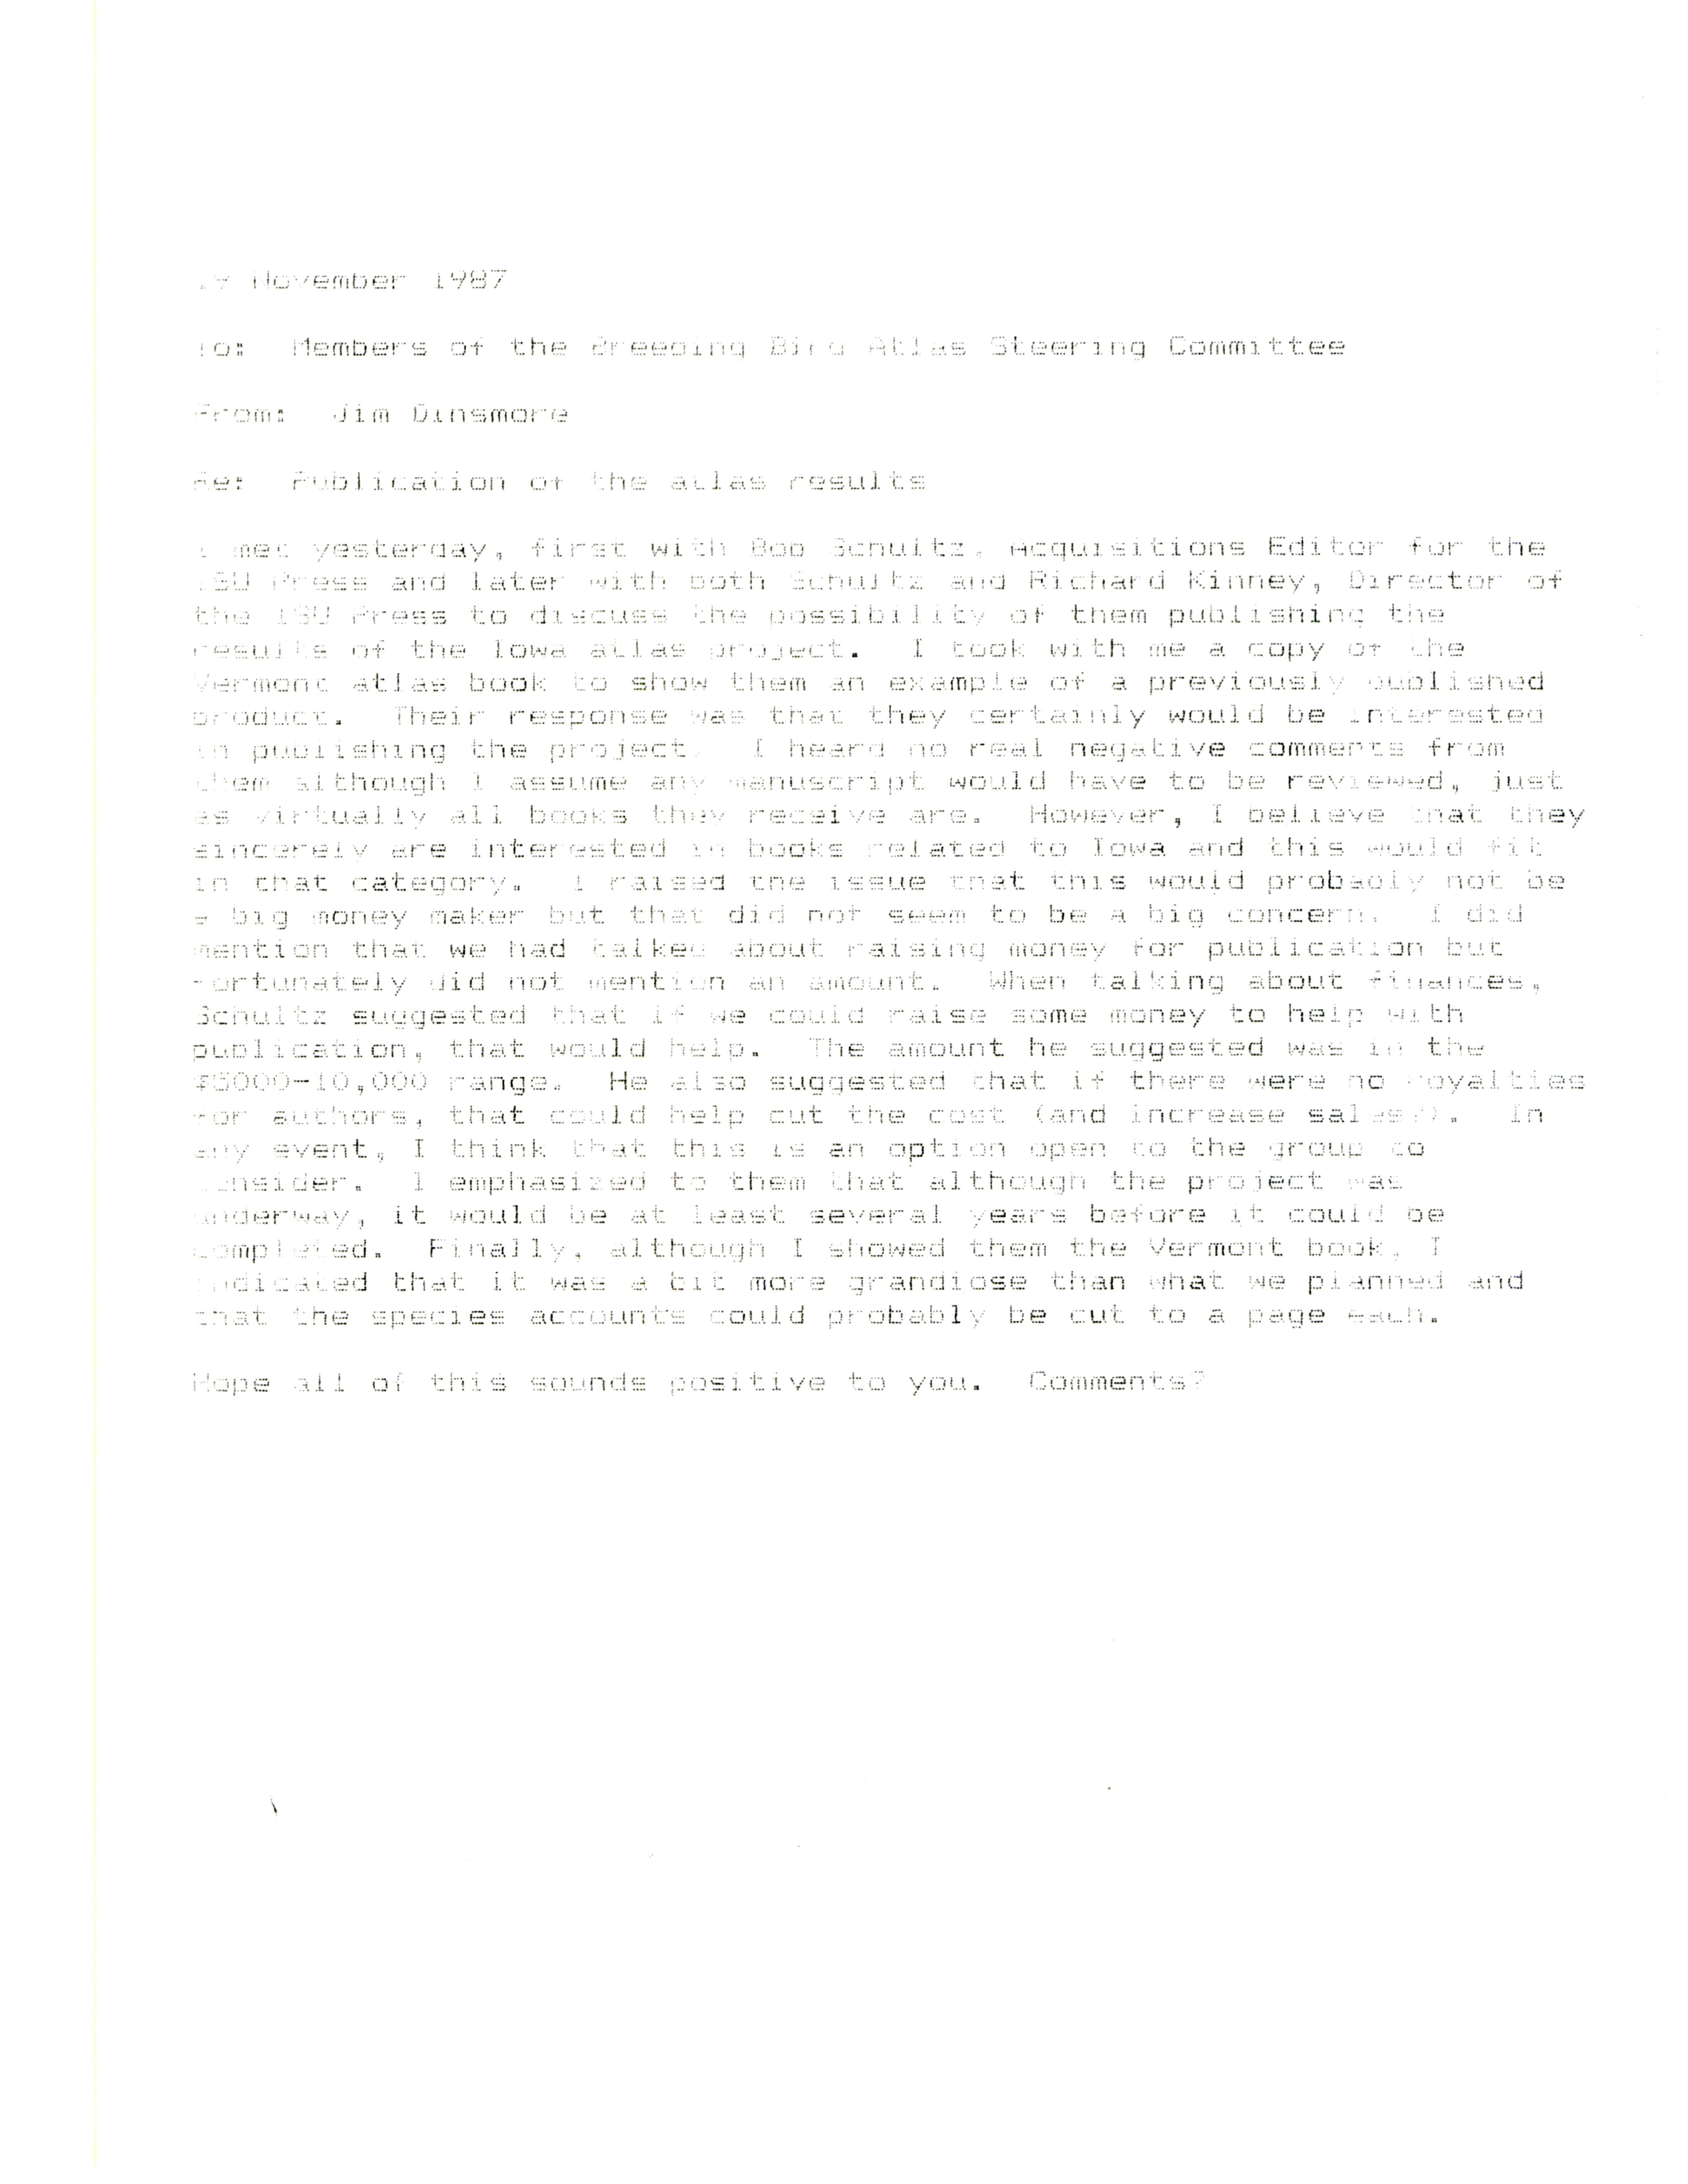 James J. Dinsmore letter to members of the Breeding Bird Atlas Steering Committee regarding the Iowa atlas project, November 19, 1987 